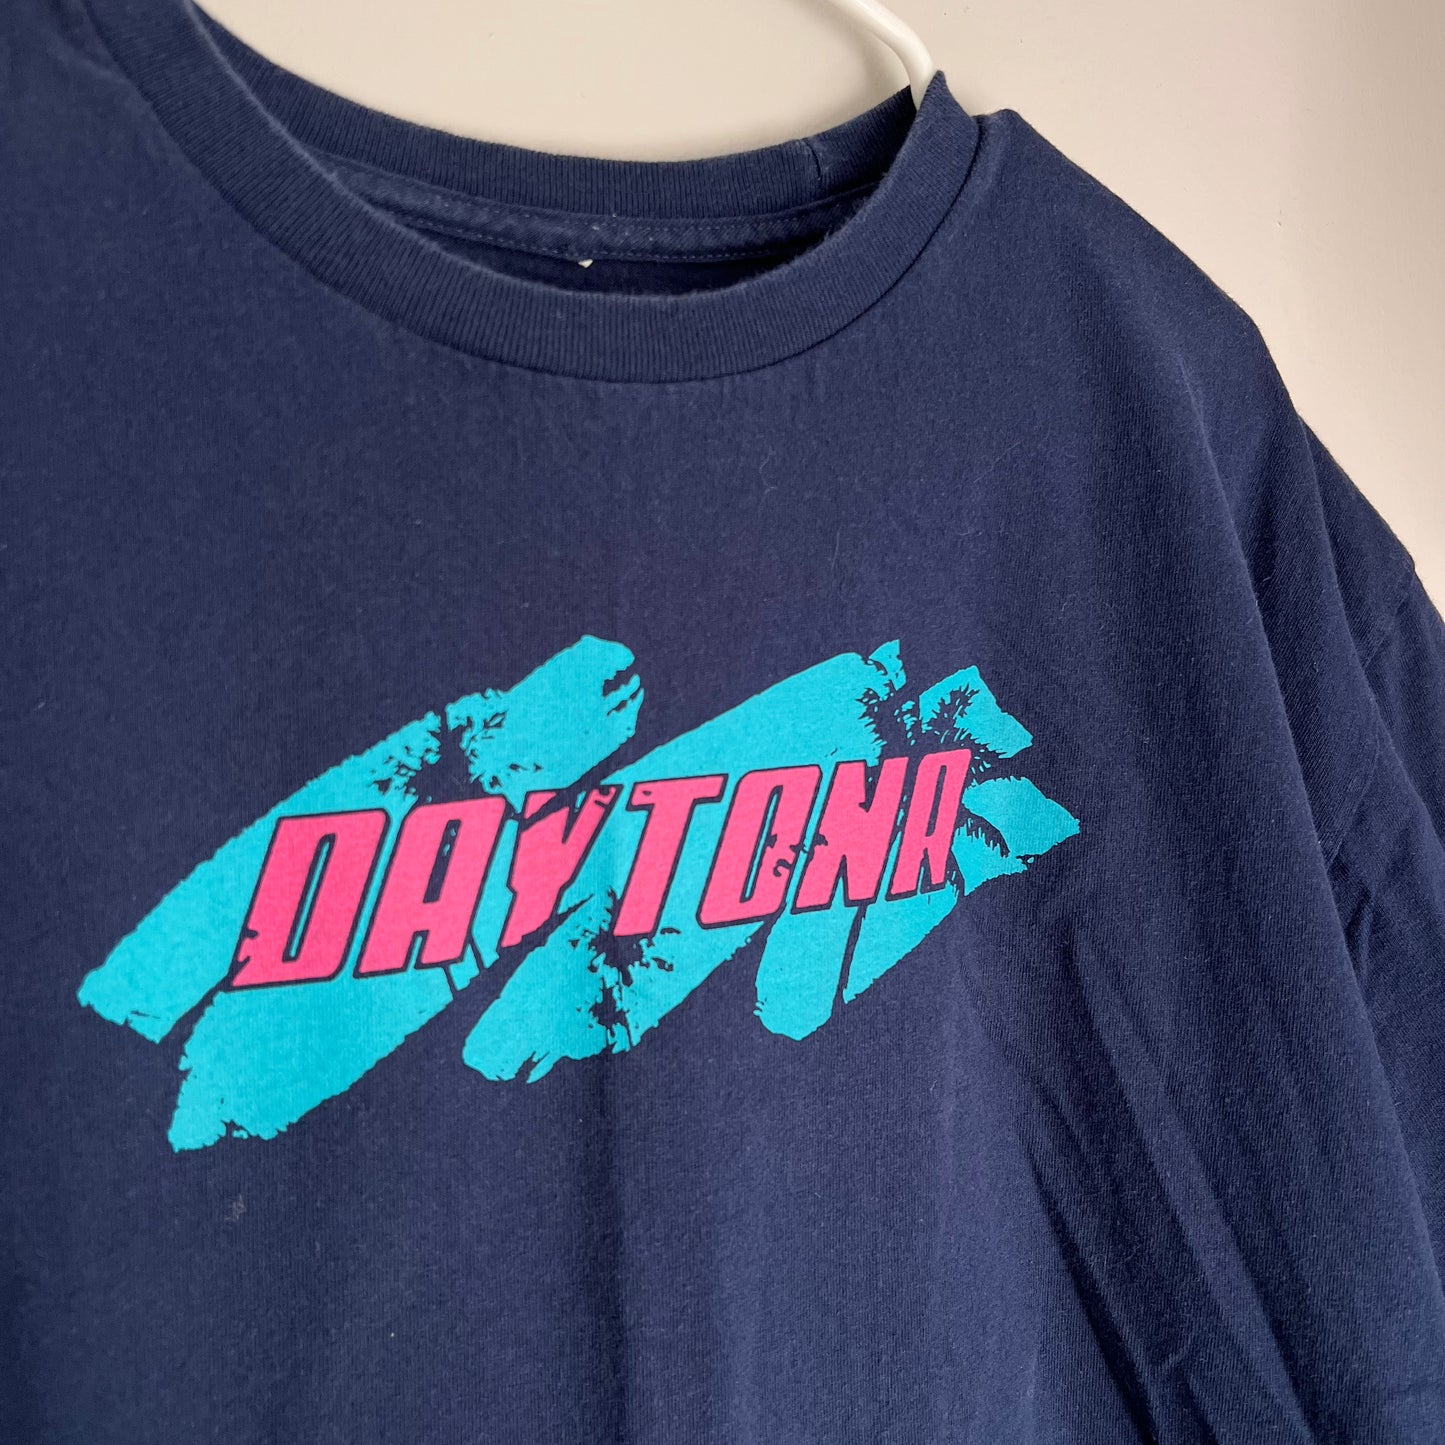 Vintage Daytona Graphic T-Shirt